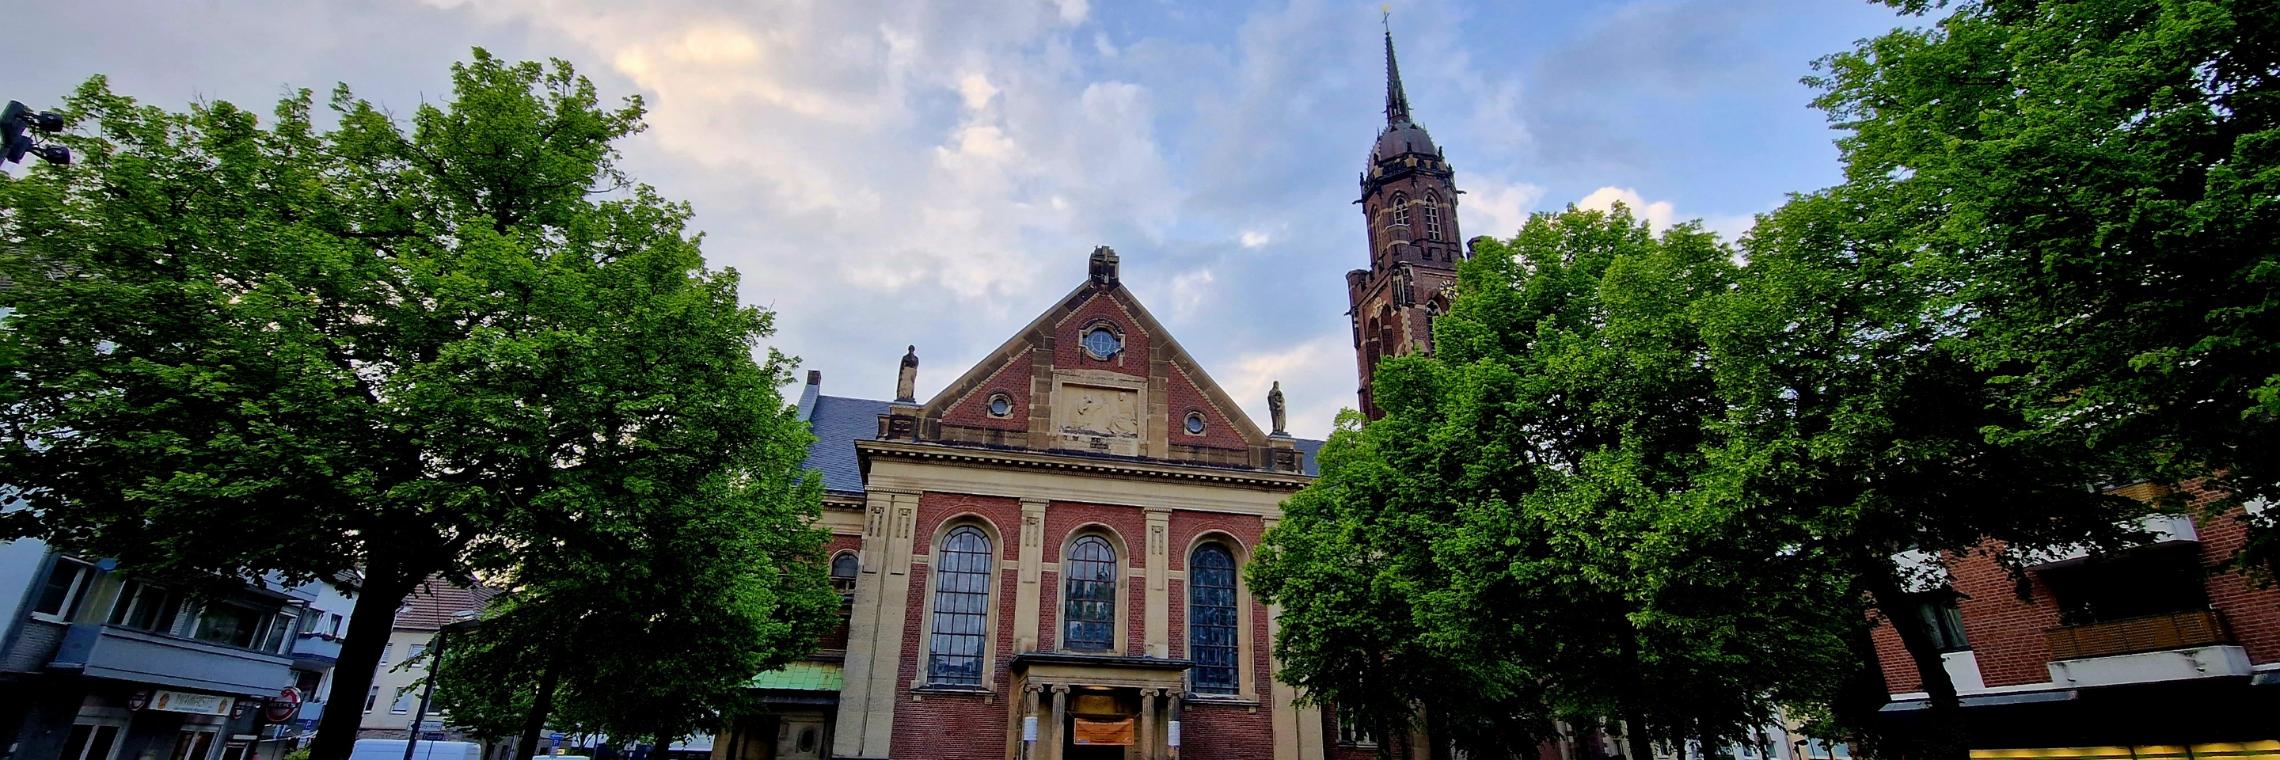 Stadtpfarrkirche St. Dionysius Krefeld 